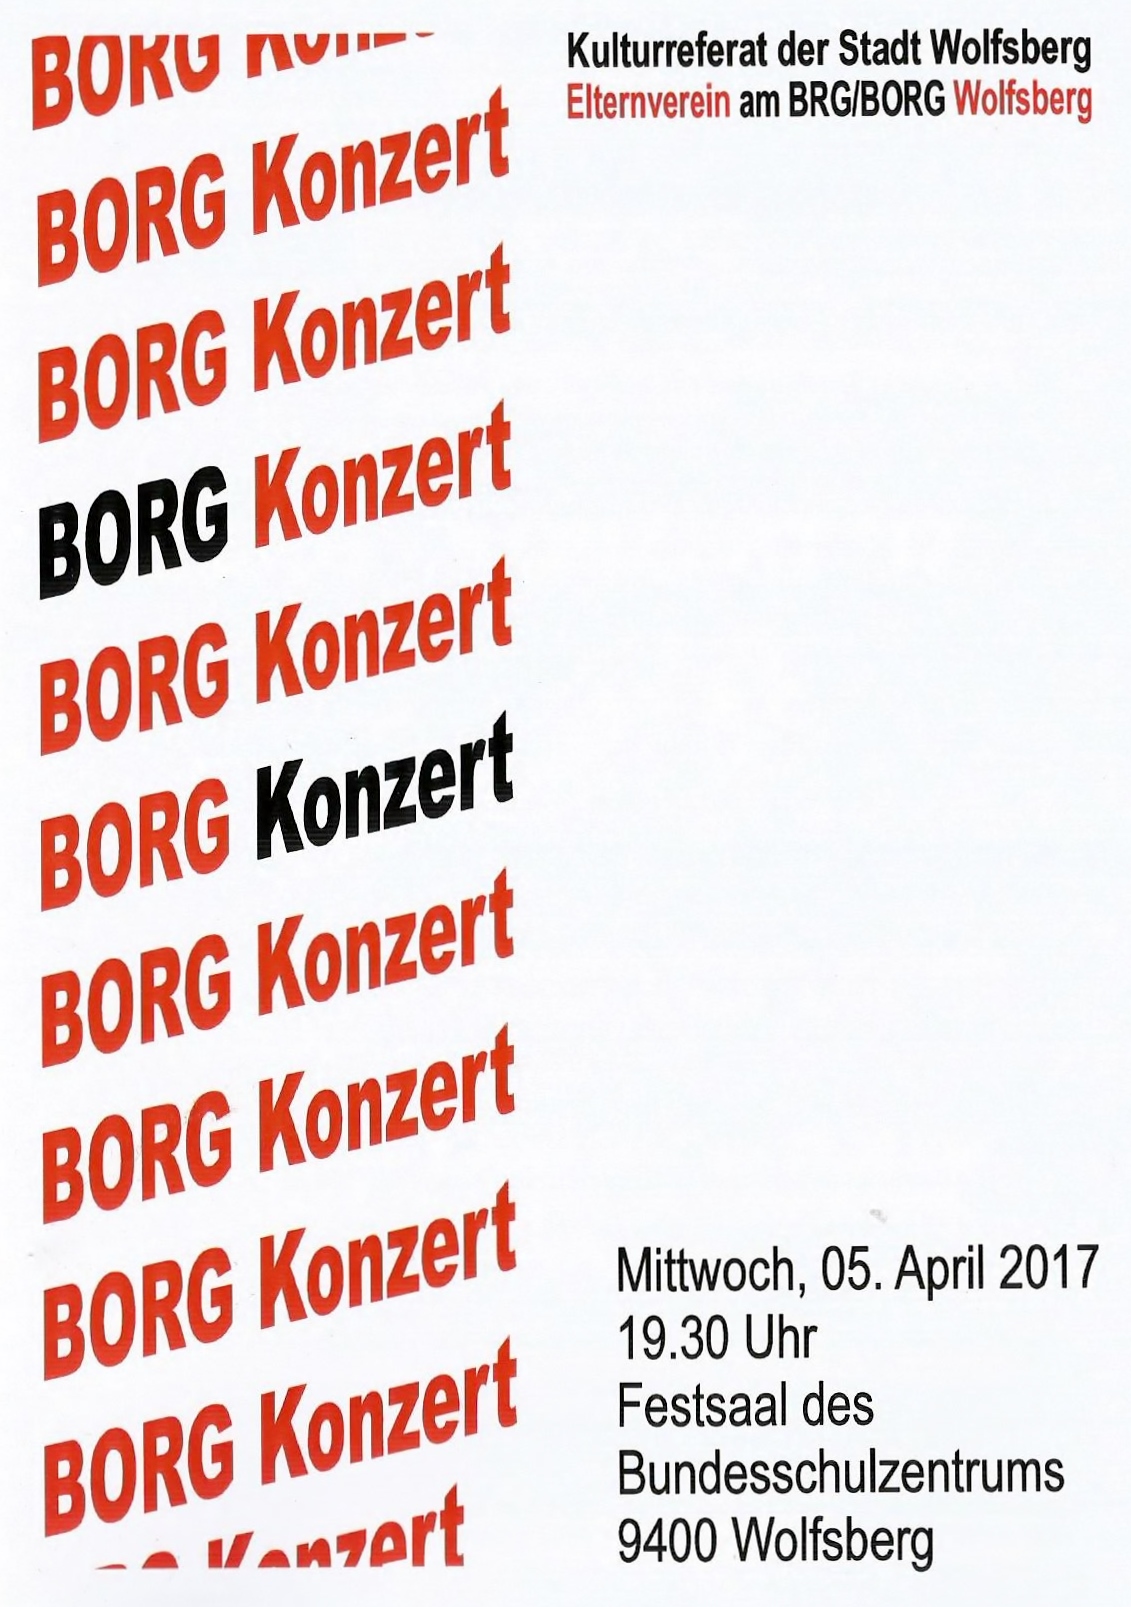 BORGKonzert (1131x1607)